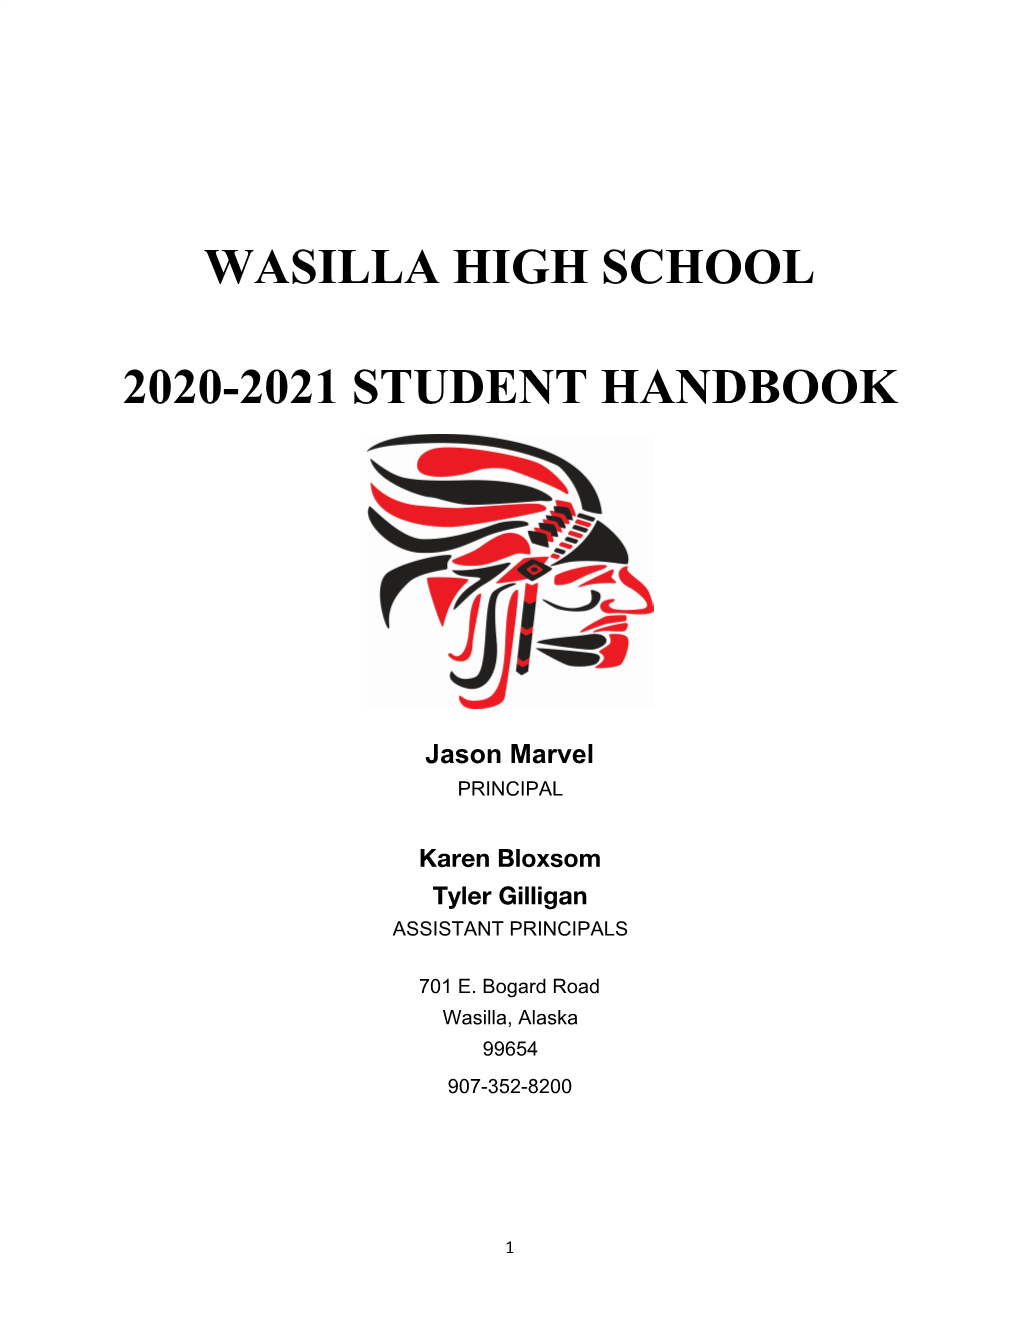 Wasilla High School 2020-2021 Student Handbook